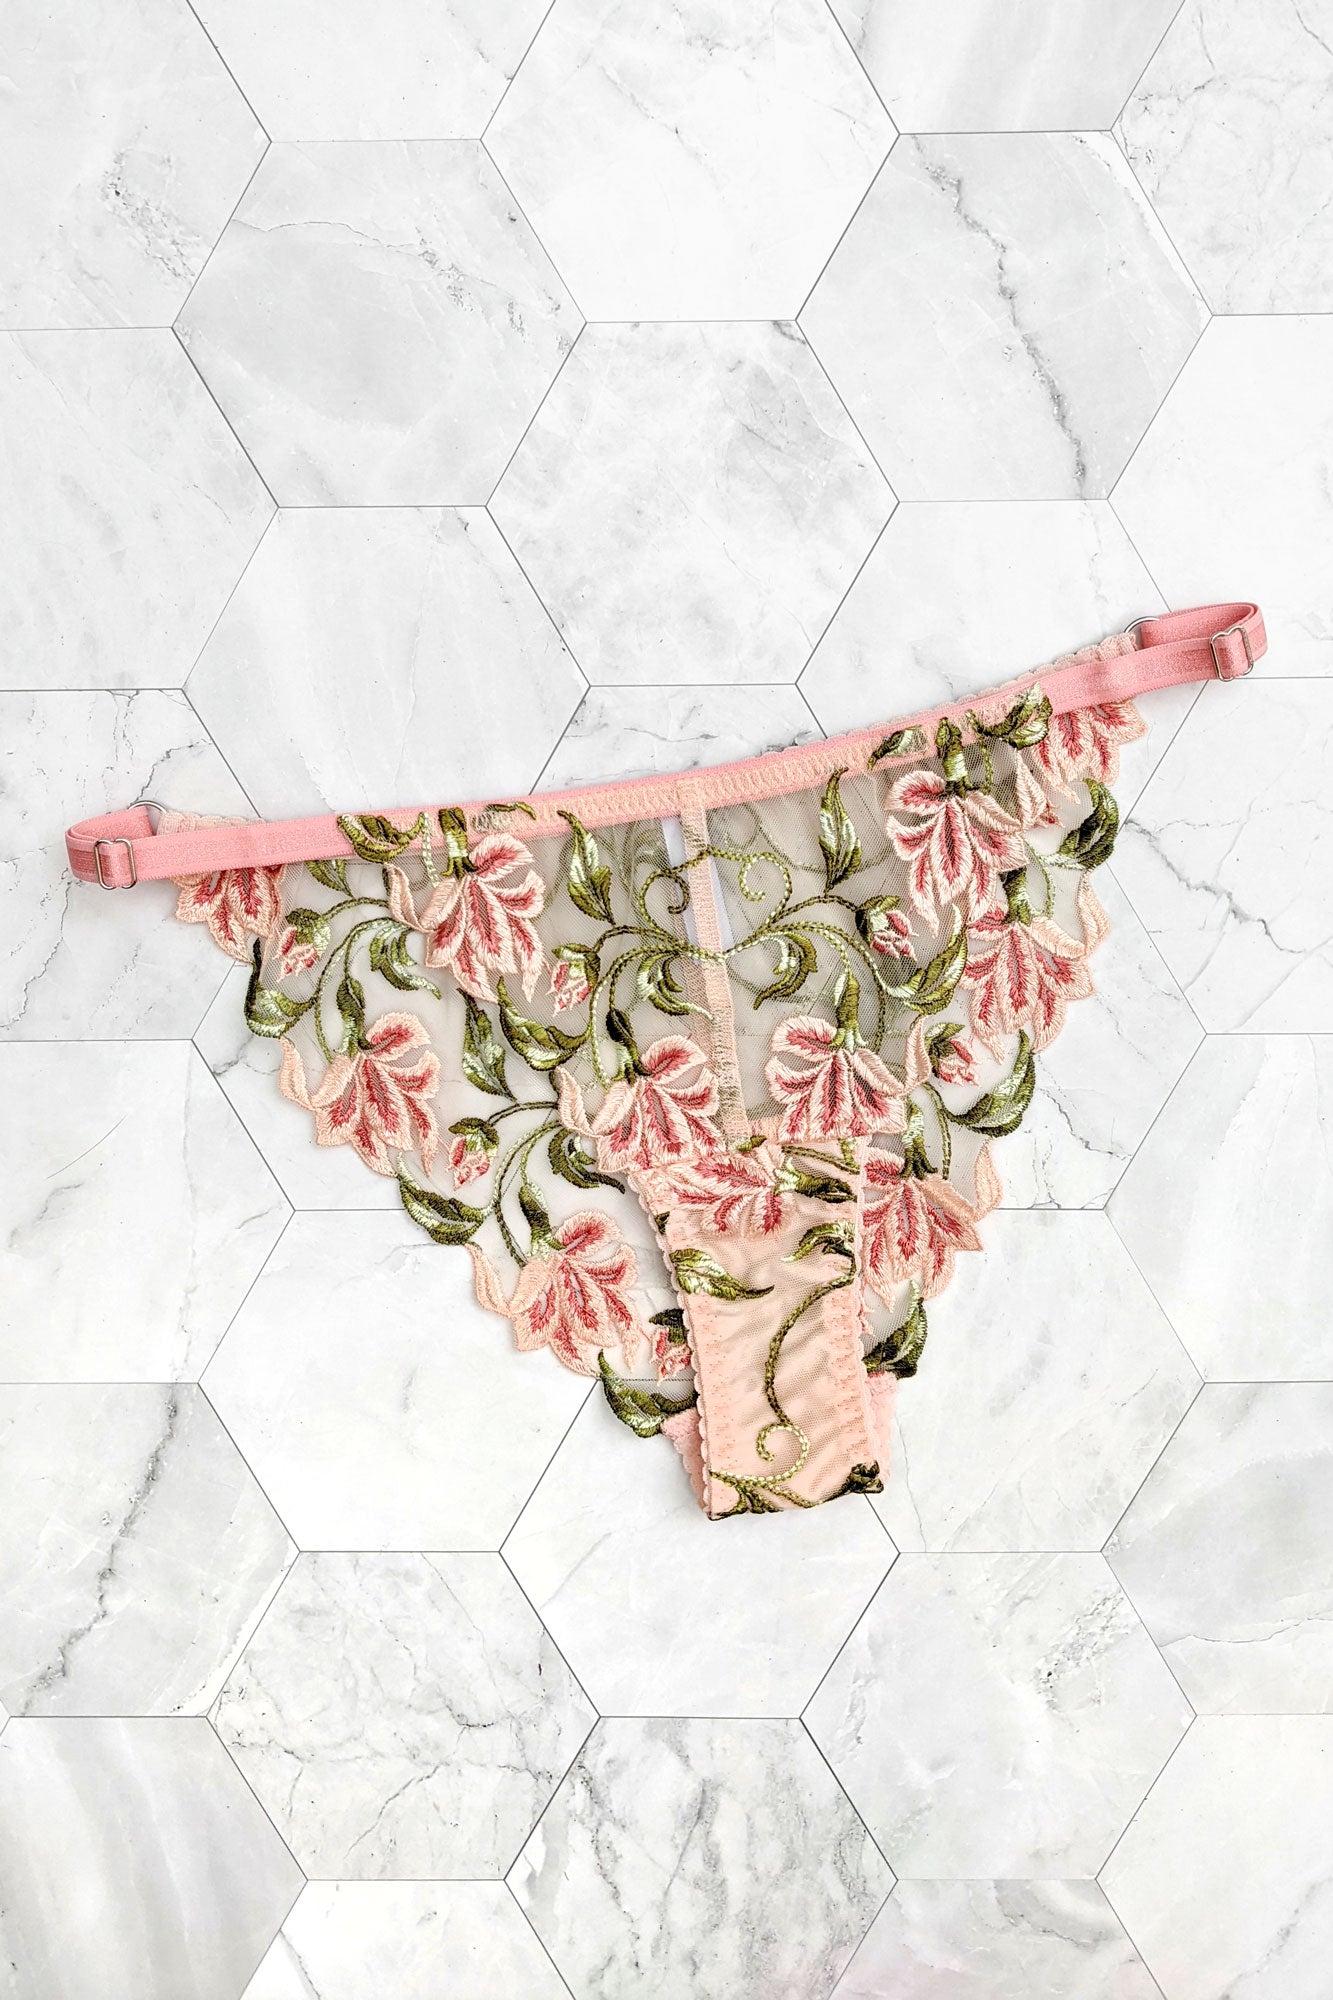 Women's Crisp Sexy Lingerie French Lace Underpants Girls' Floral